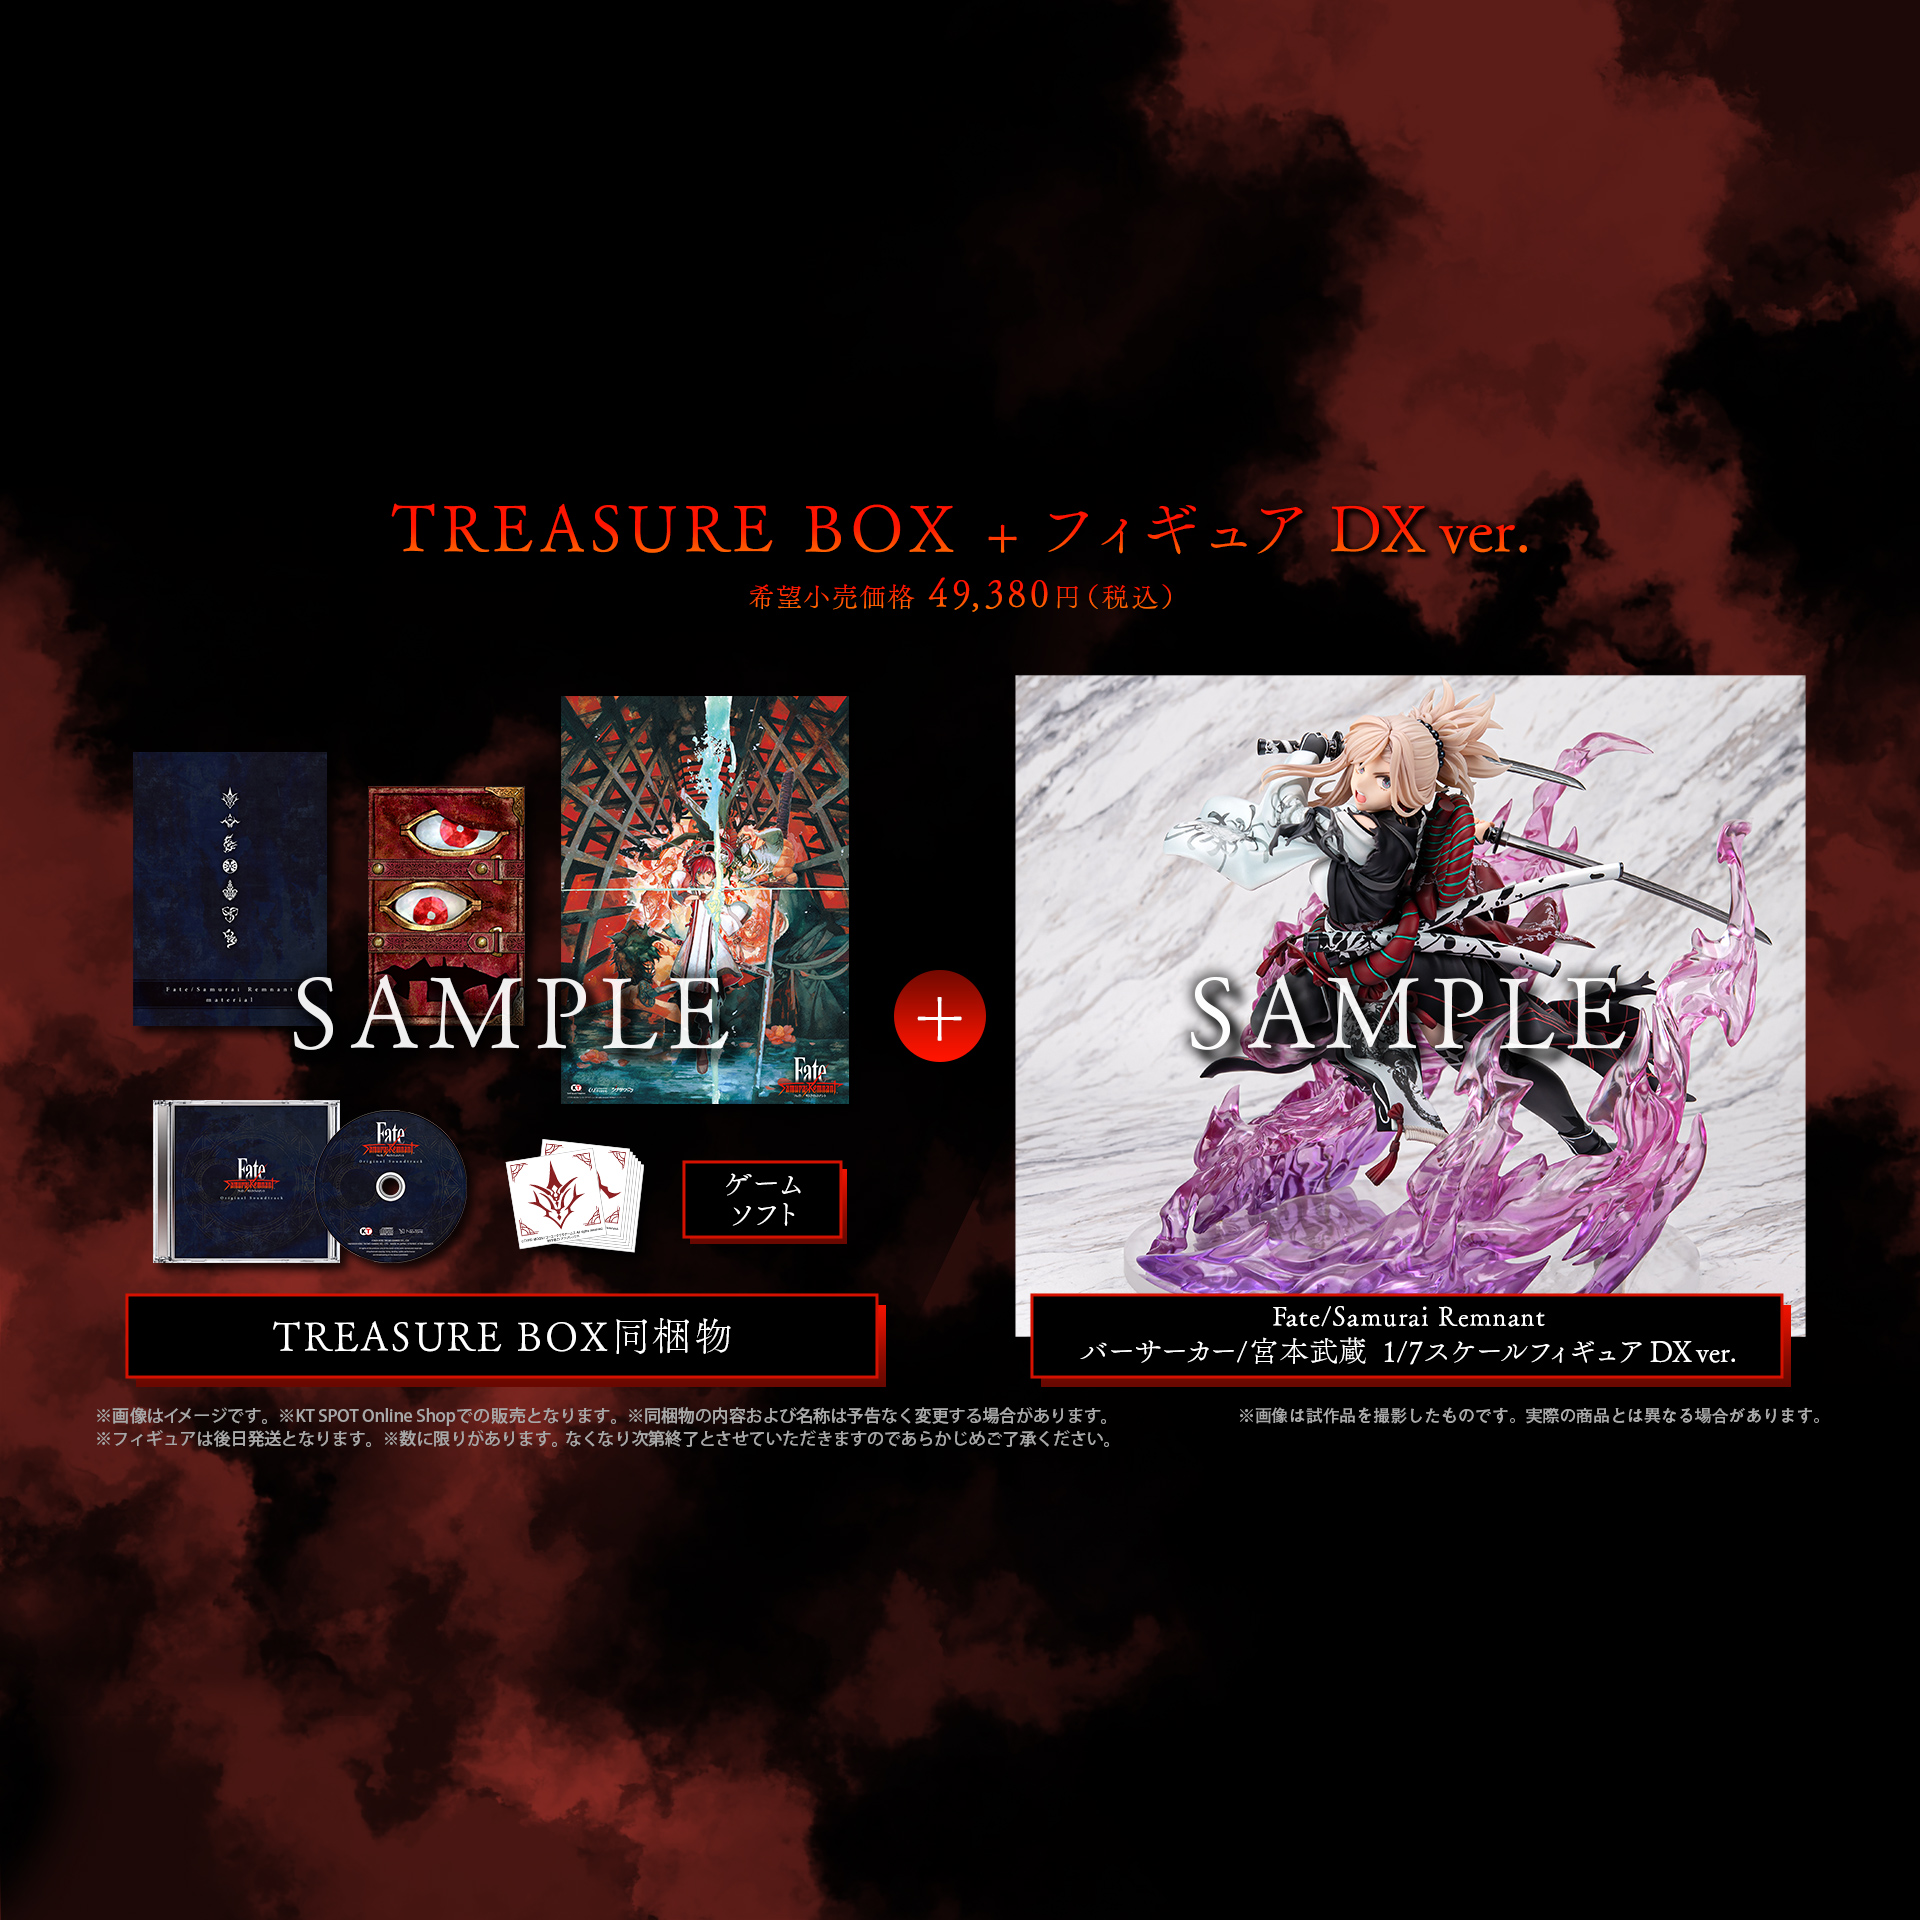 KT model+ 商品ページ Fate/Samurai Remnant TREASURE BOX + 